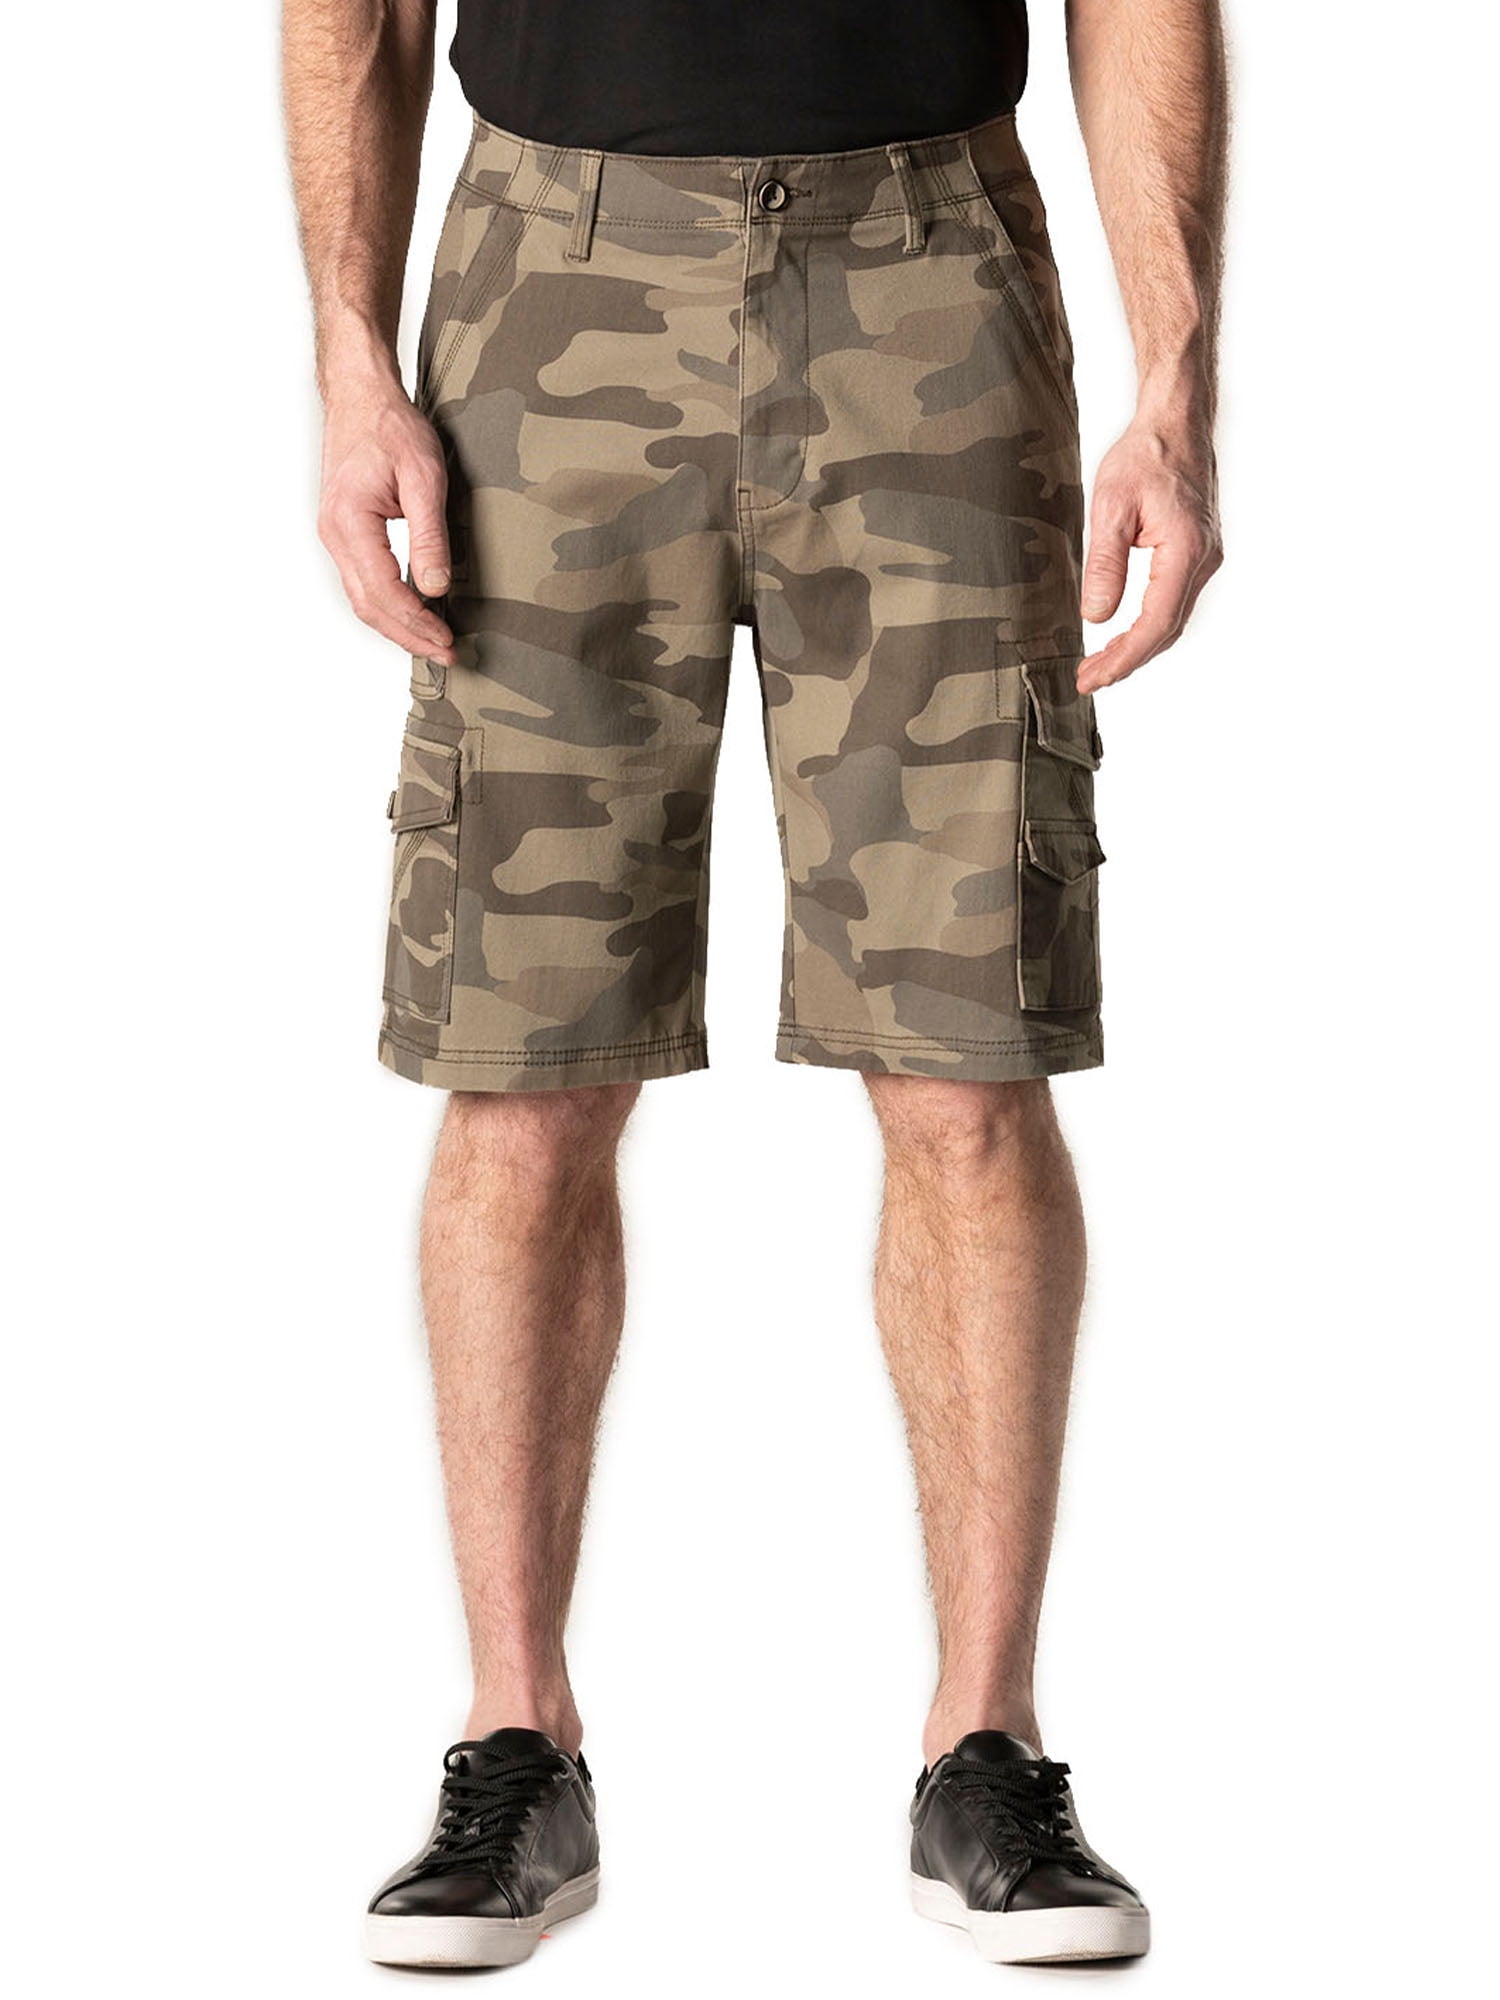 Men's Army Camouflage Plain Elasticated Shorts Cotton Fleece Summer Casual Wear 